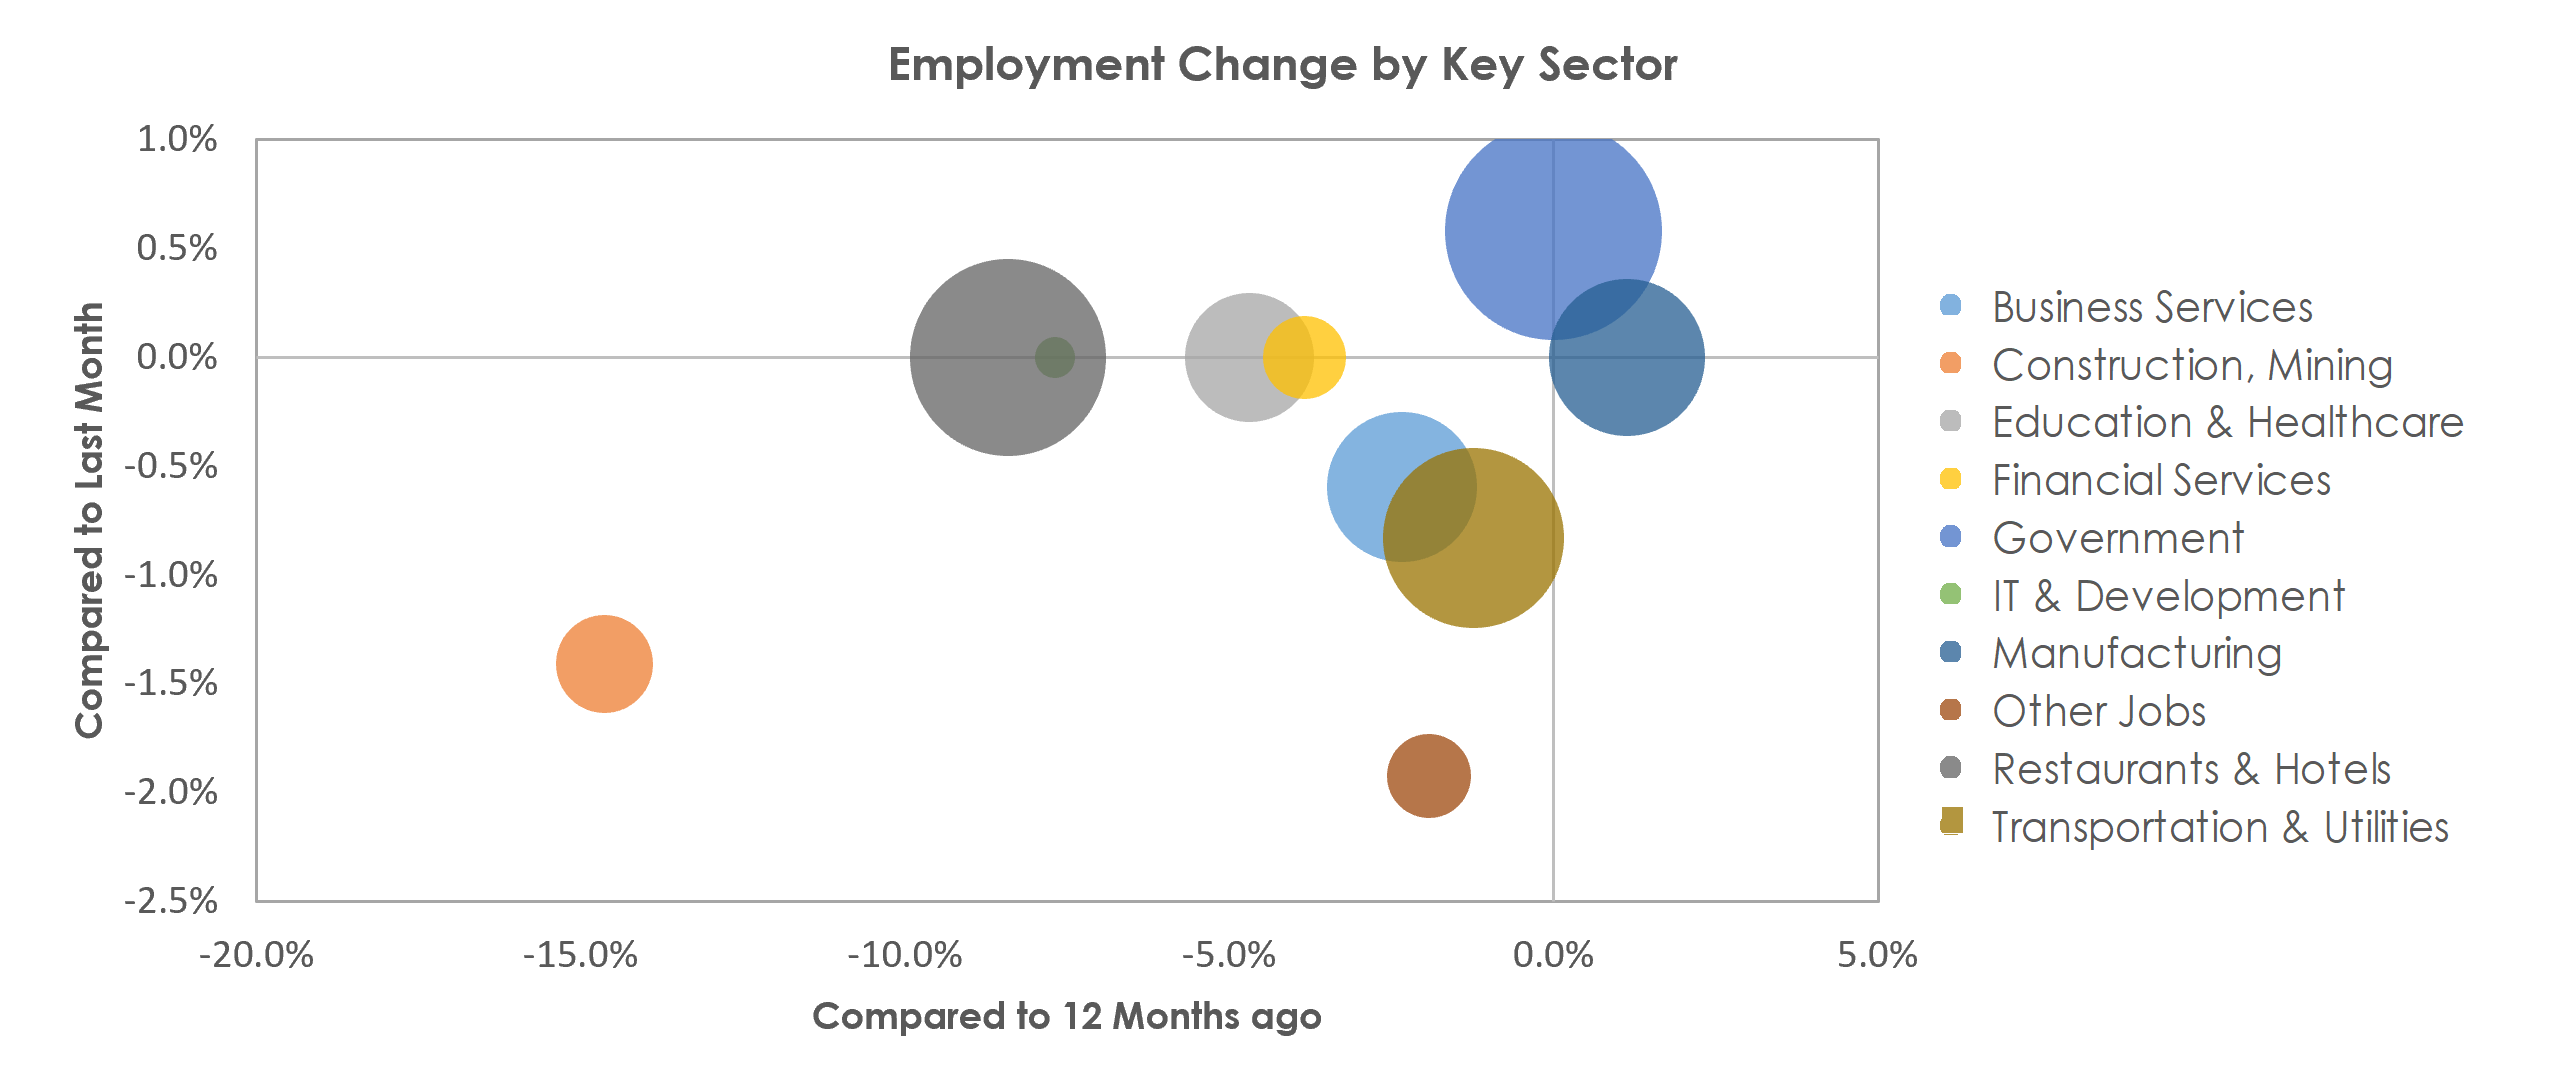 Gulfport-Biloxi-Pascagoula, MS Unemployment by Industry February 2021